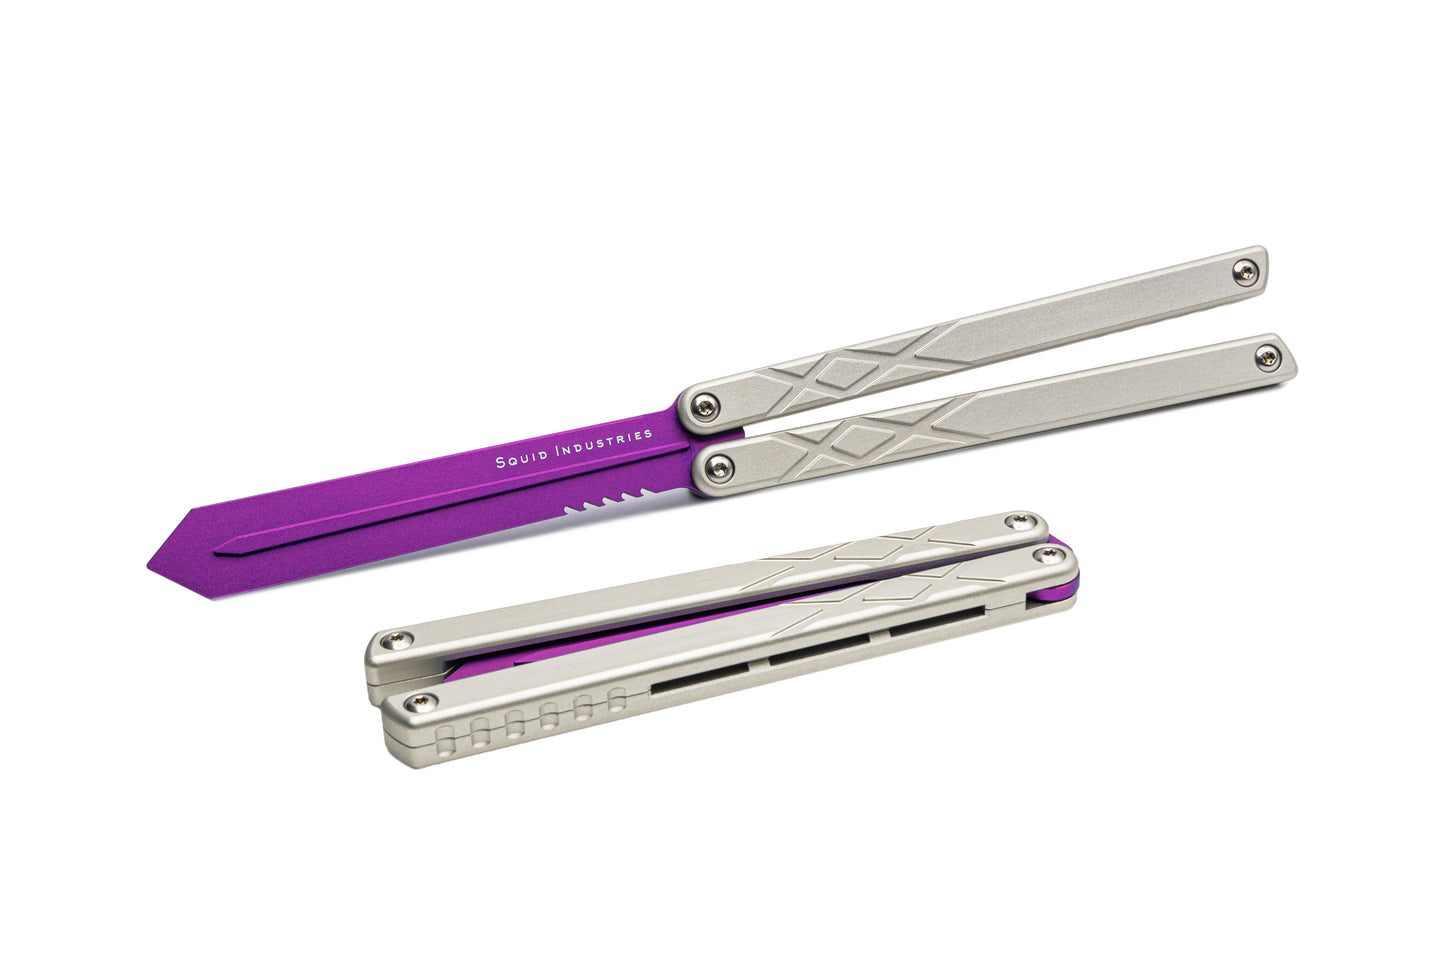 purple blade silver handles silver hardware swordfish balisosng butterfly knife trainer fidget toy